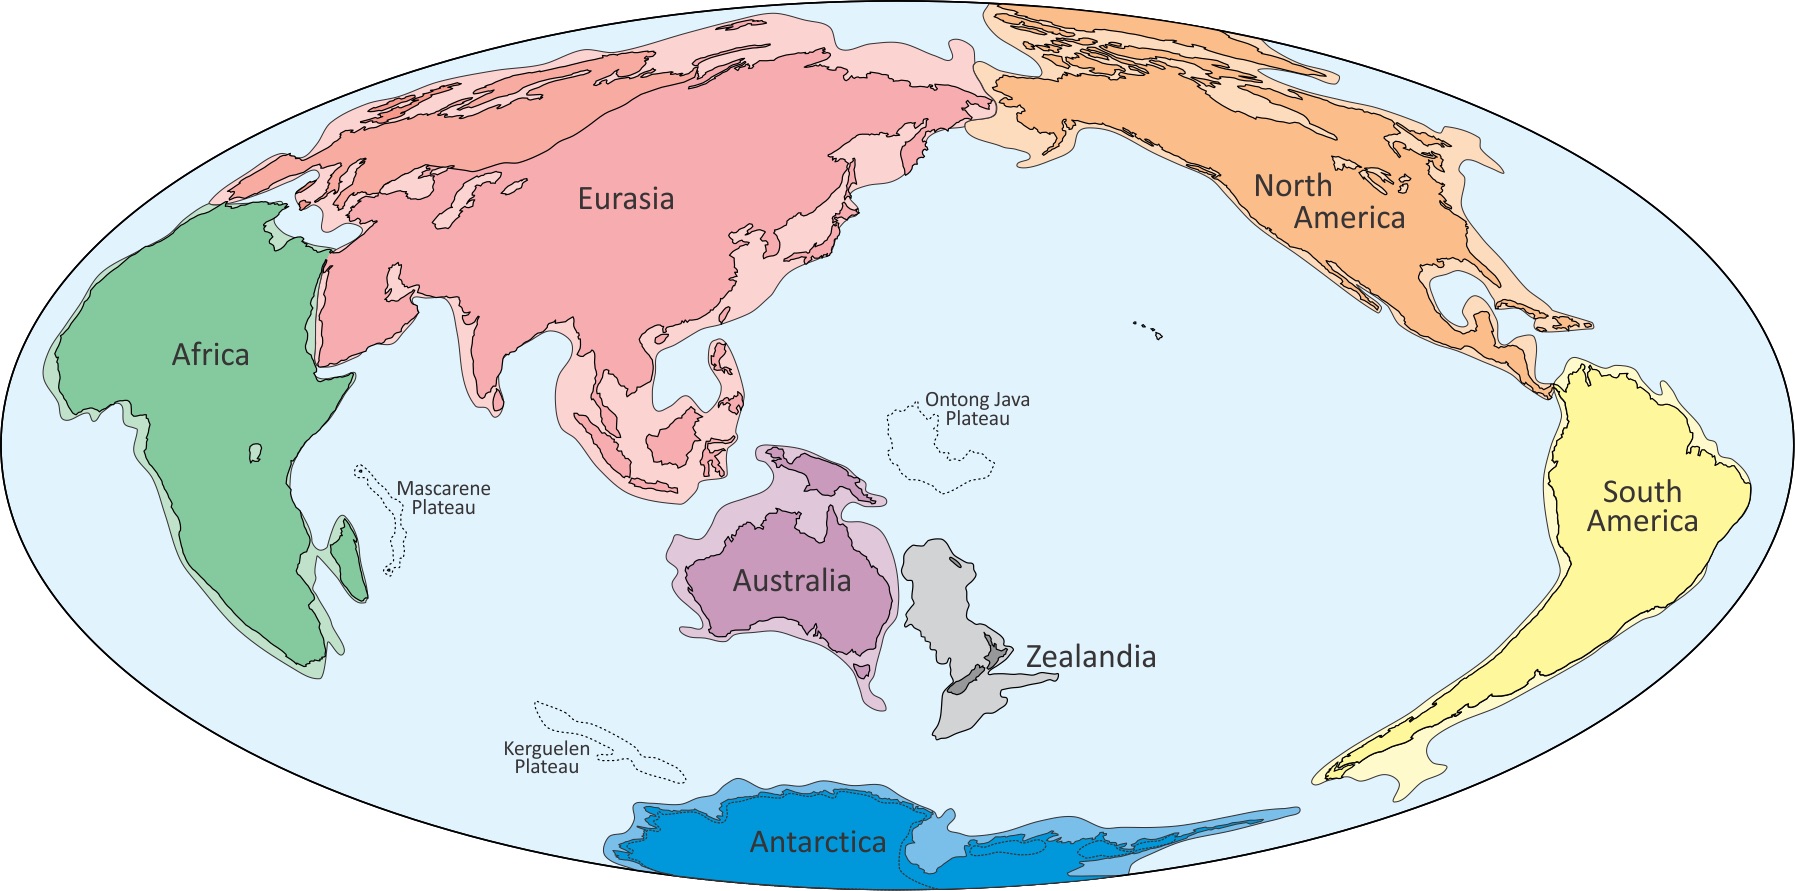 Zealandia, Earth's Hidden Eighth Continent, Is No Longer Lost